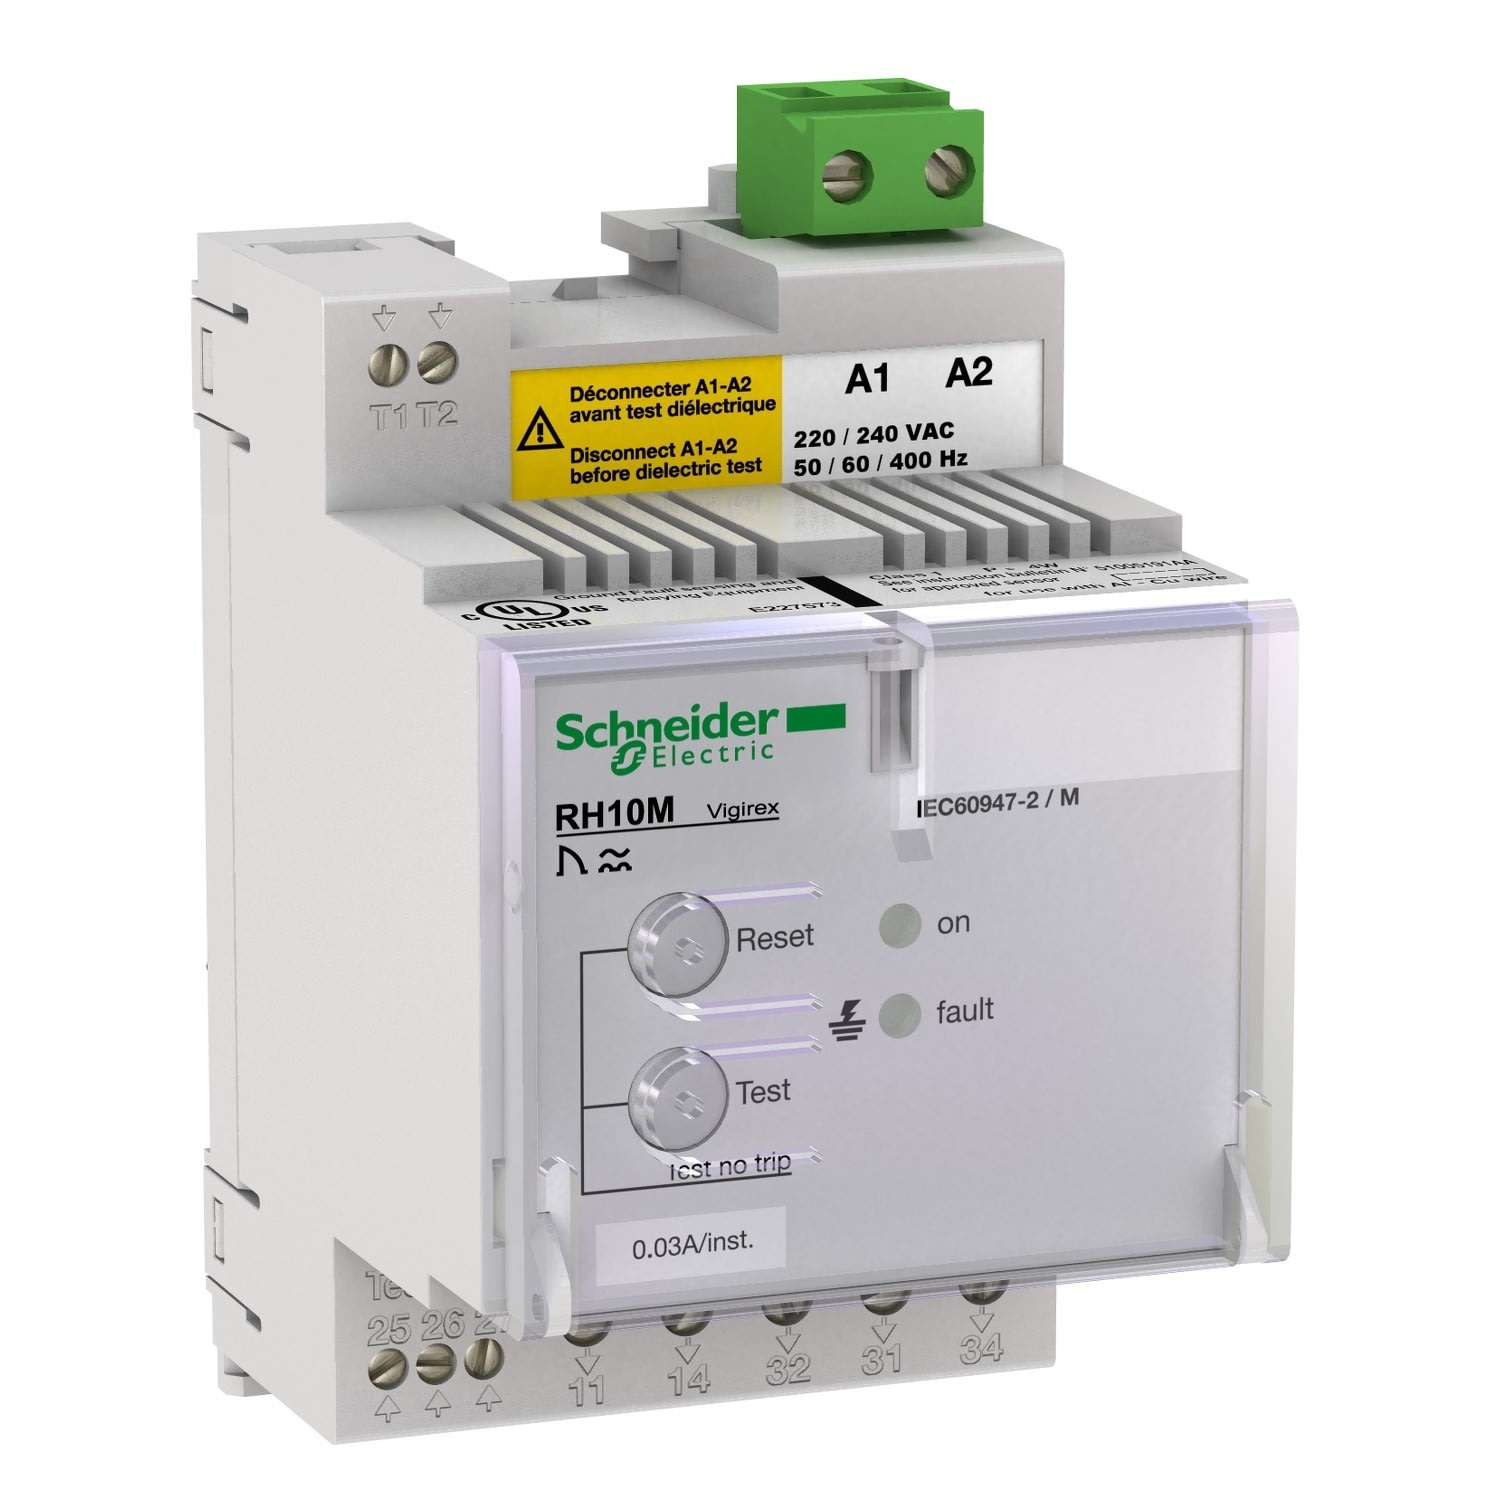 Schneider Electric - VigiPacT - Vigirex - RH10M 380-415VAC sensibilite 0,3A instantane